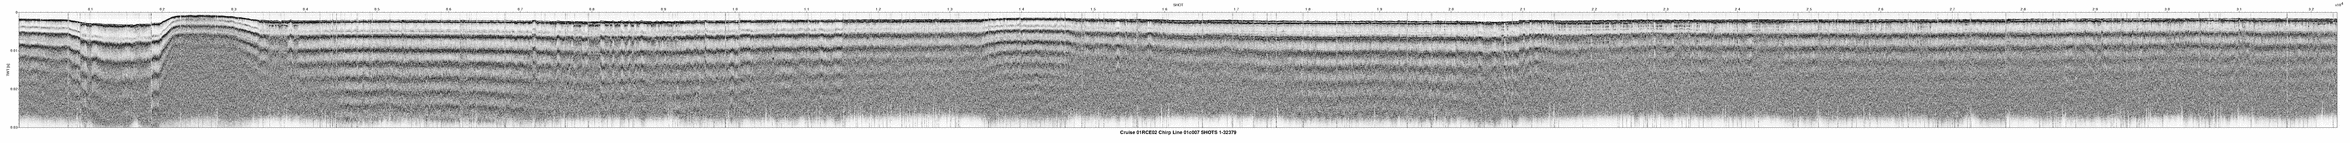 01RCE02 01c007 seismic profile image thumbnail